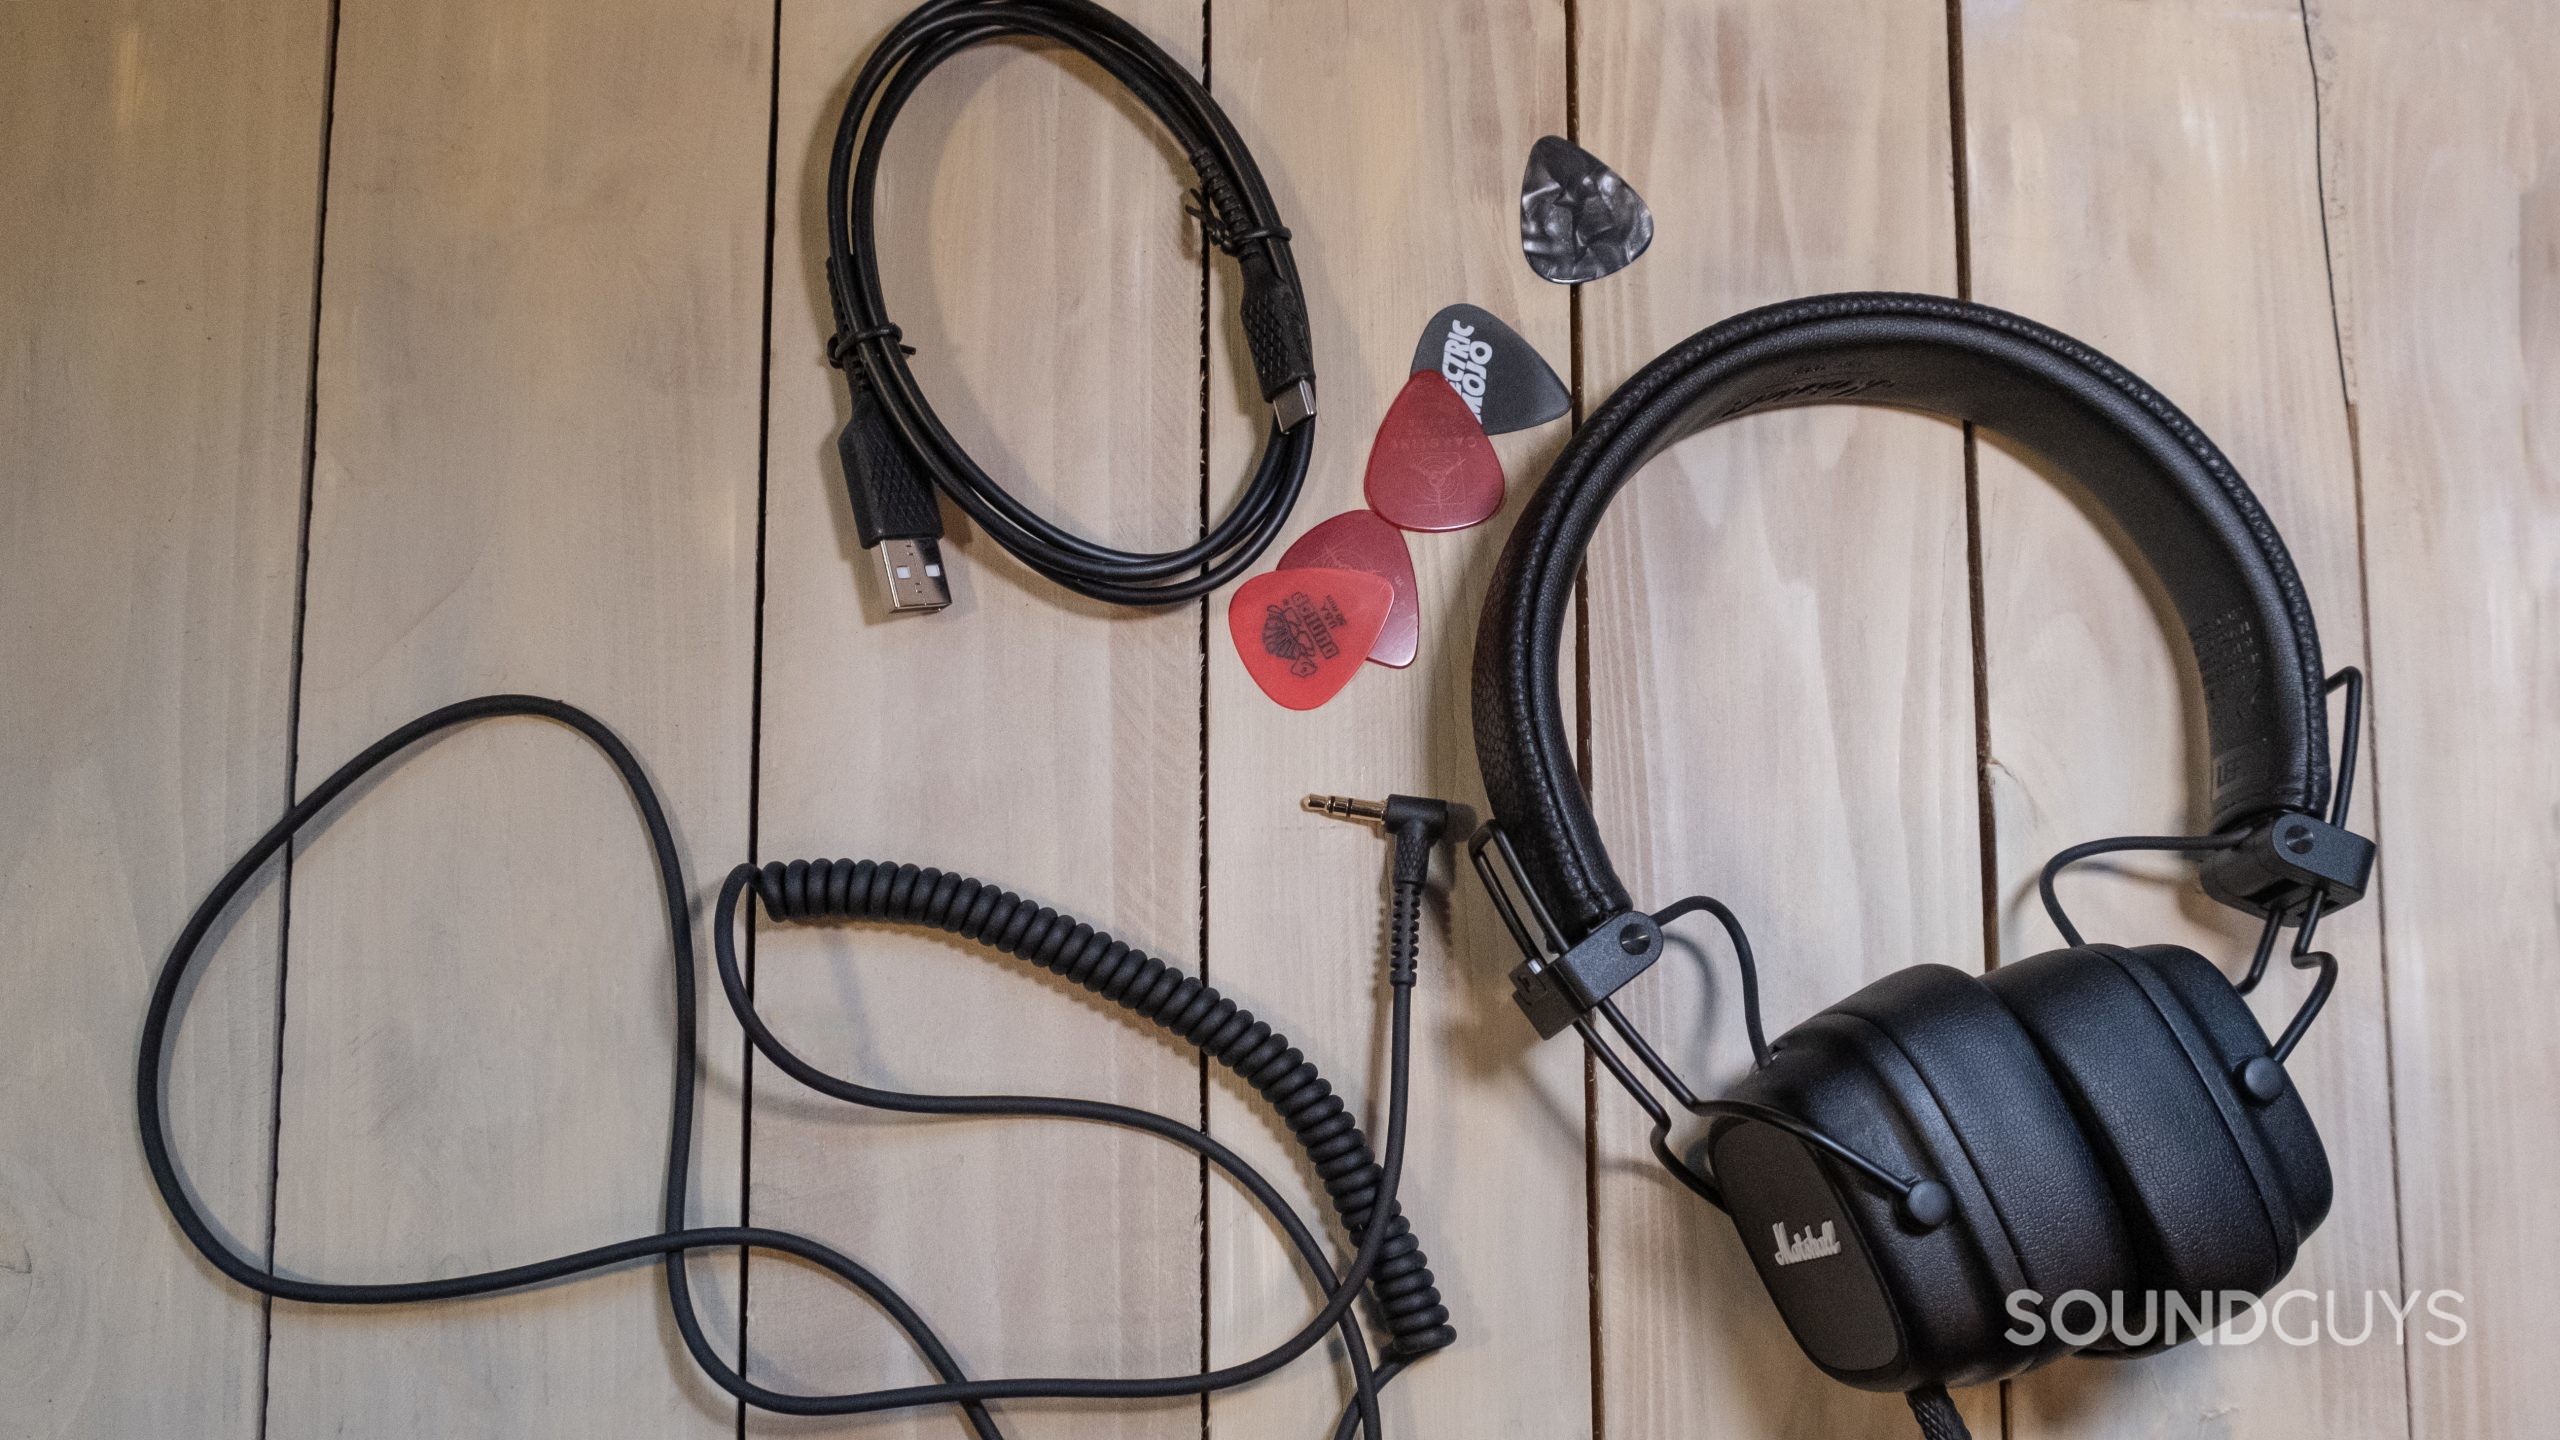 Marshall Major IV headphone review: On-ear sonic sweetness